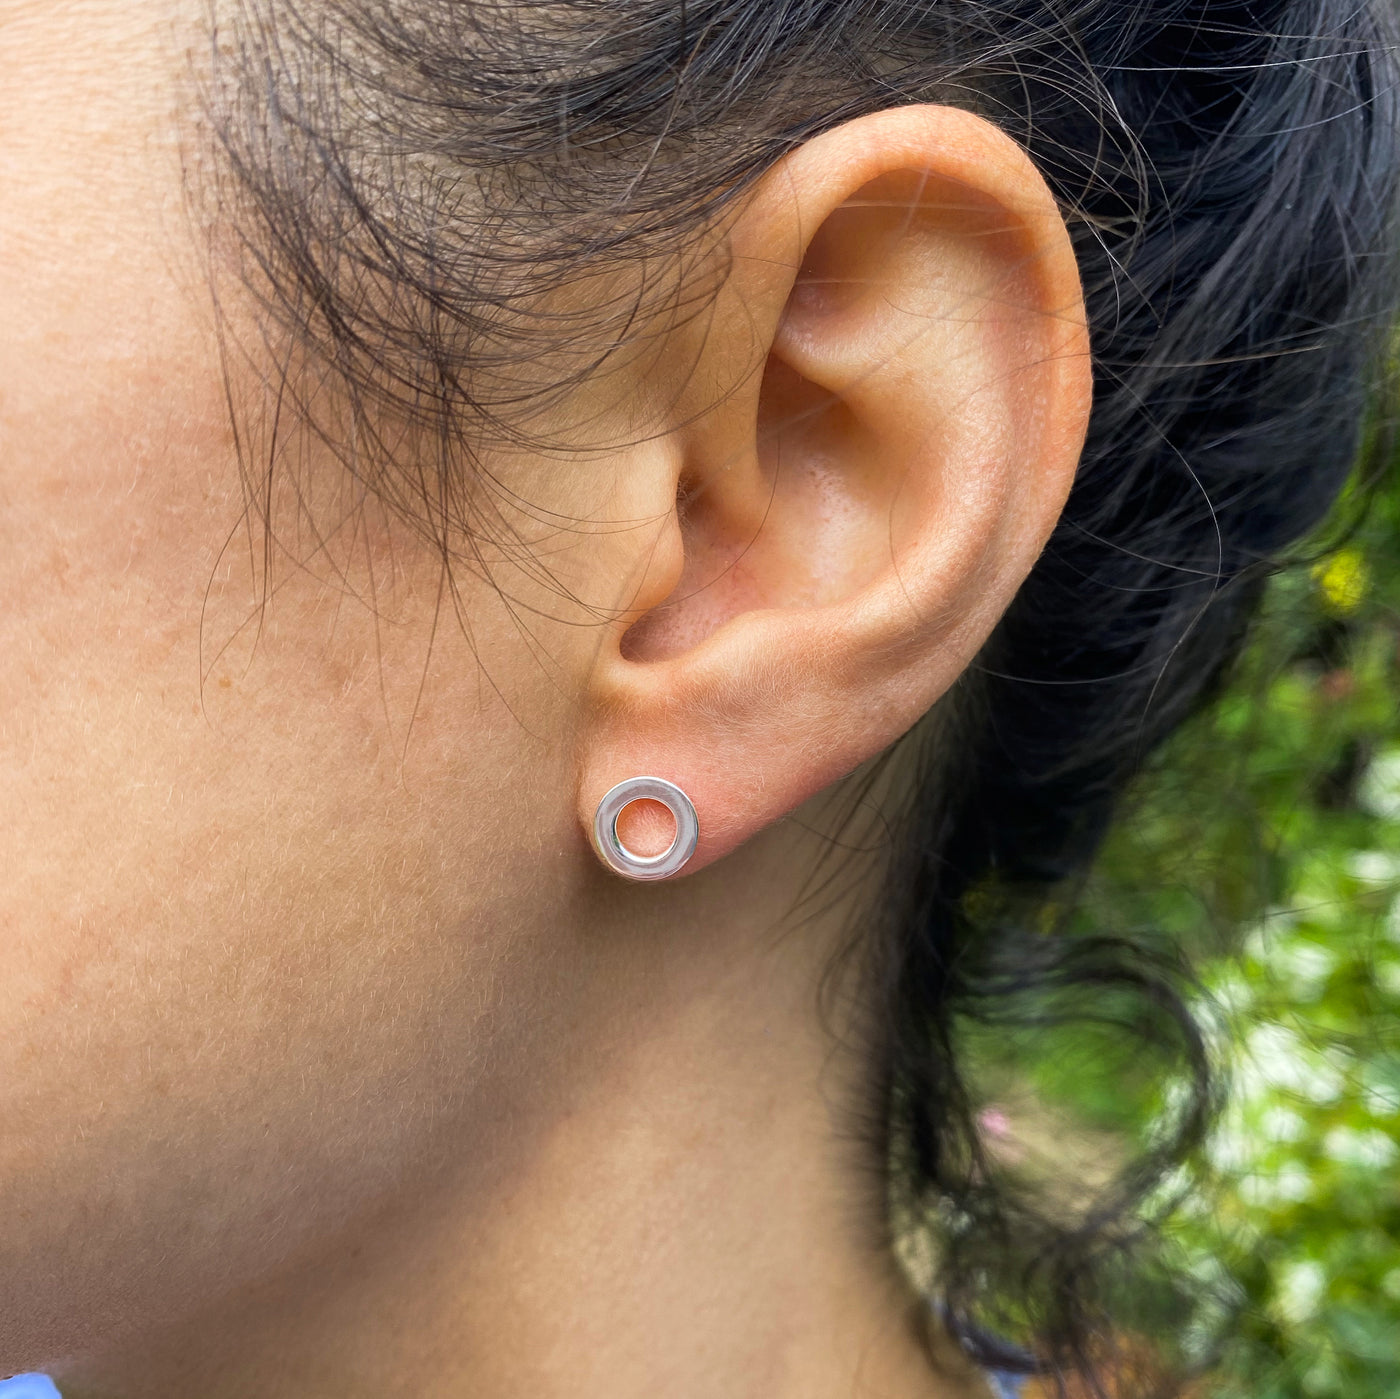 Plain silver circle stud earrings